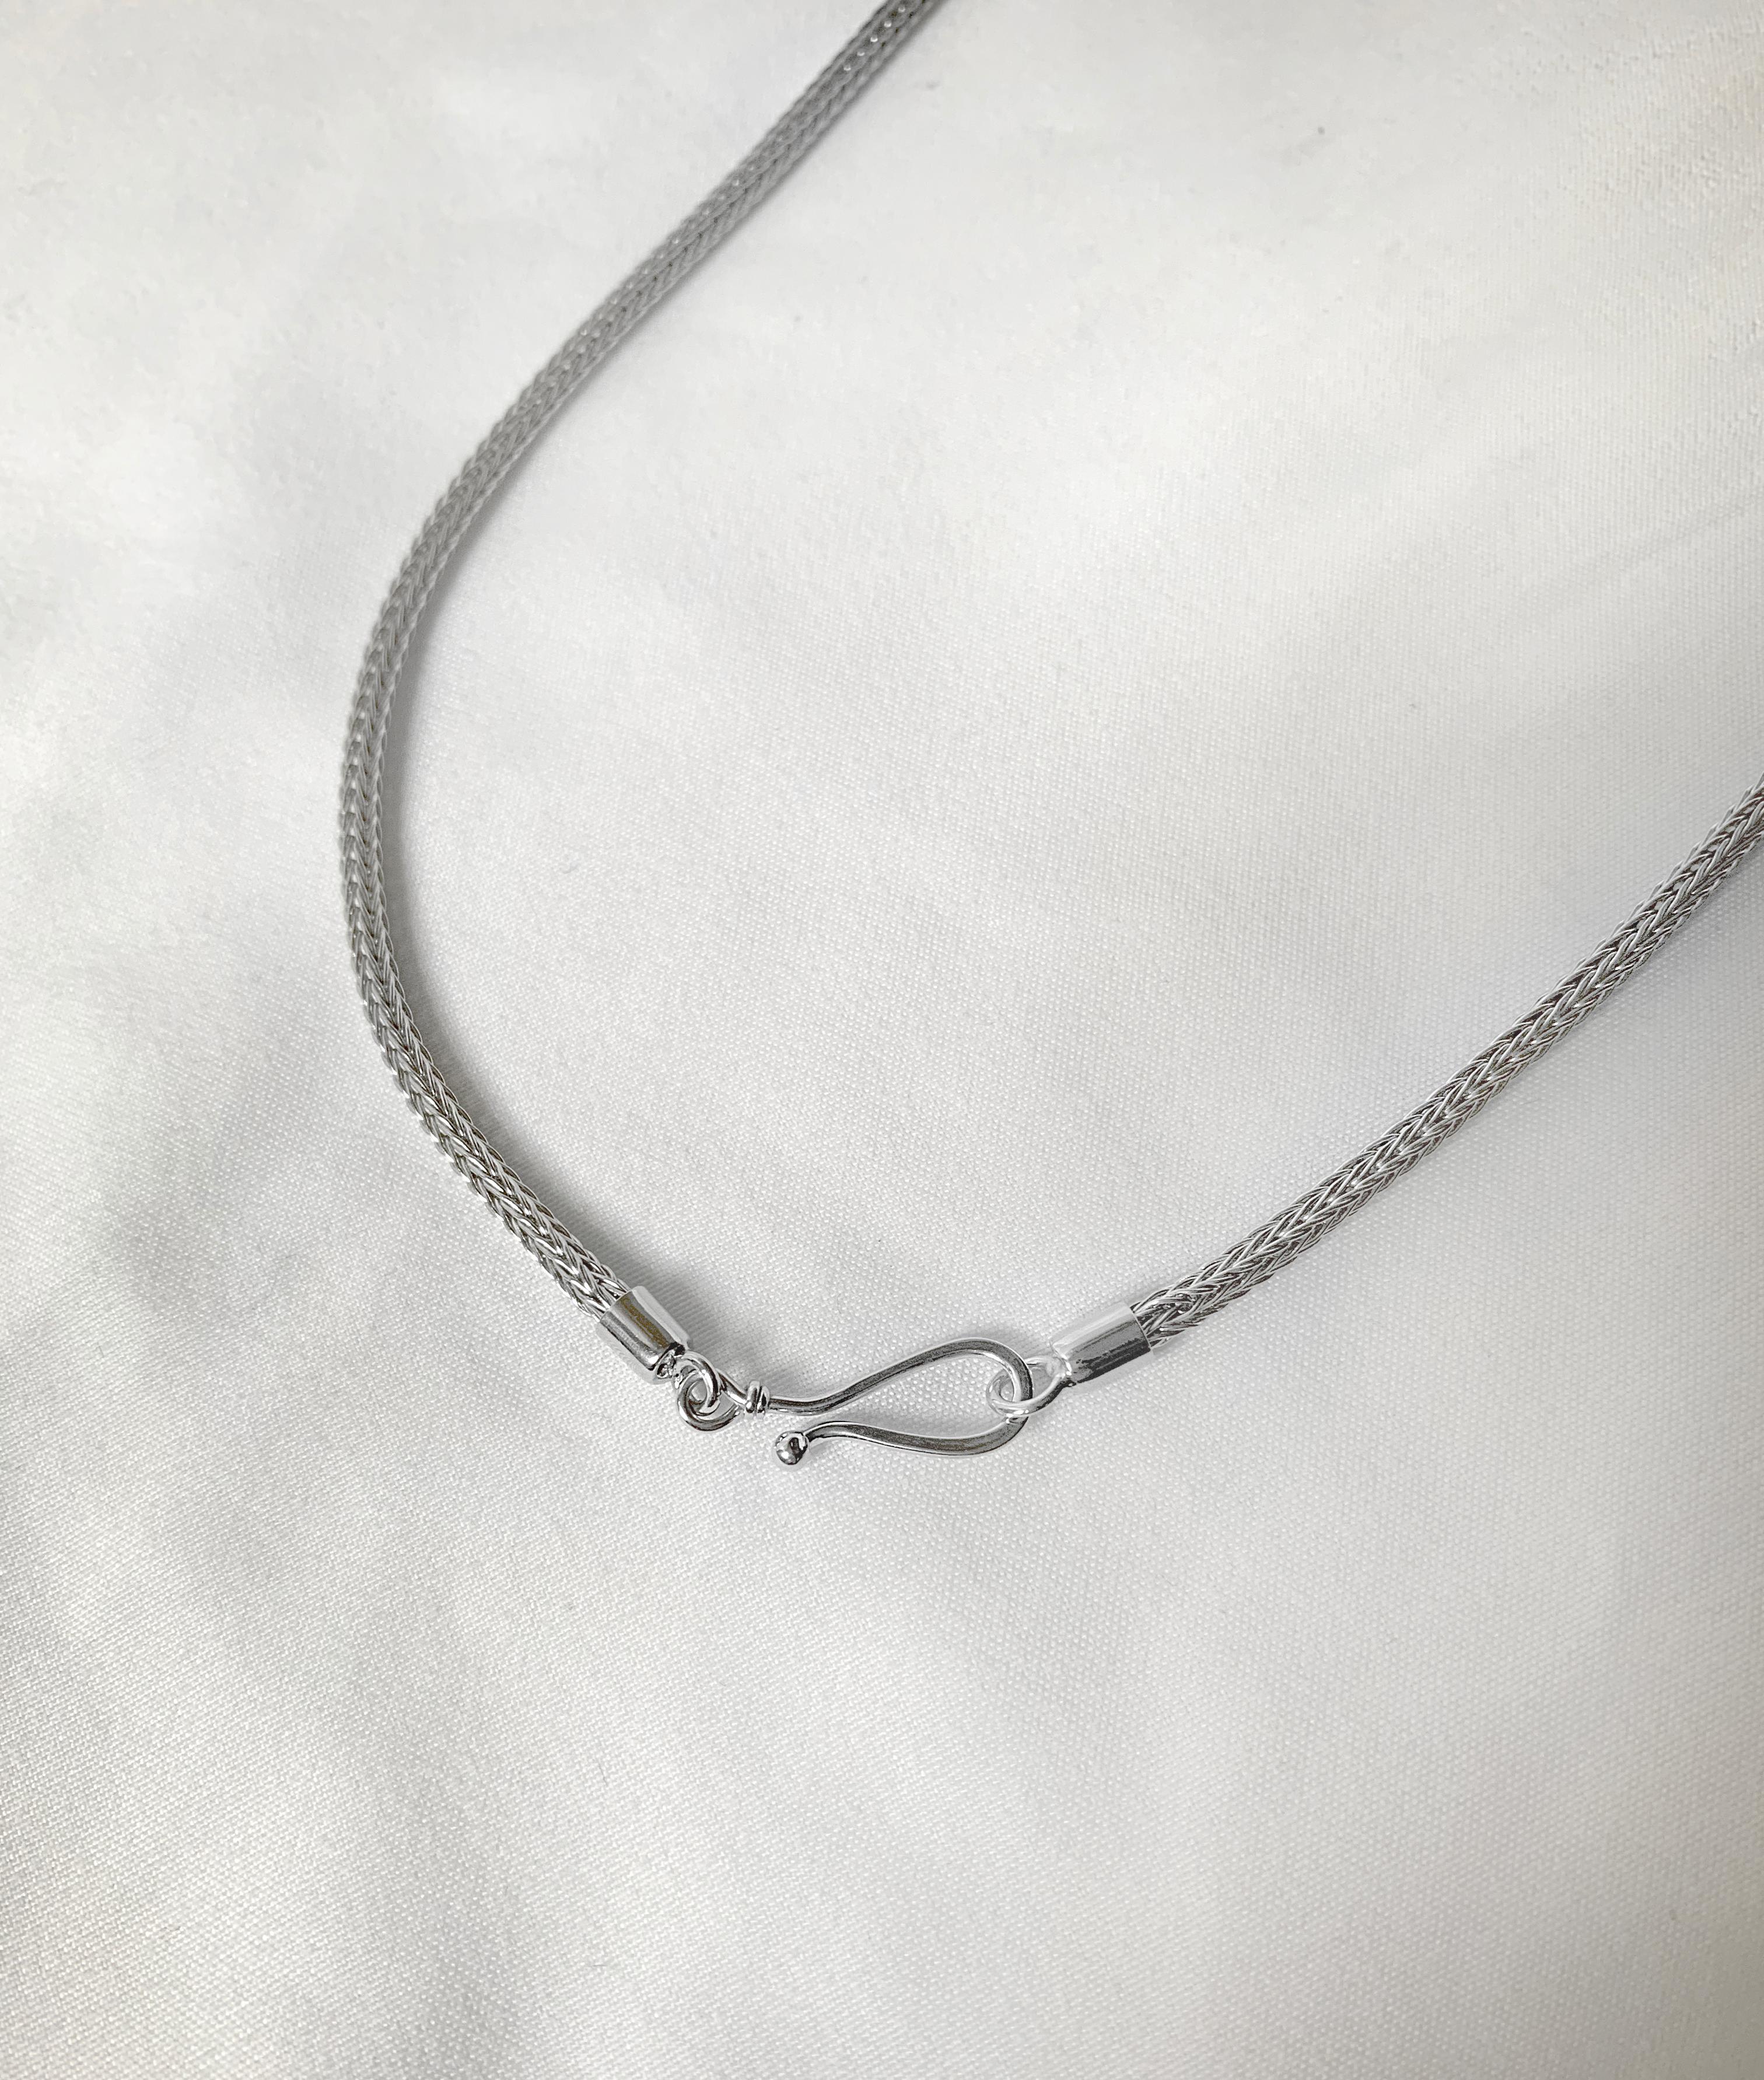 palladium necklace